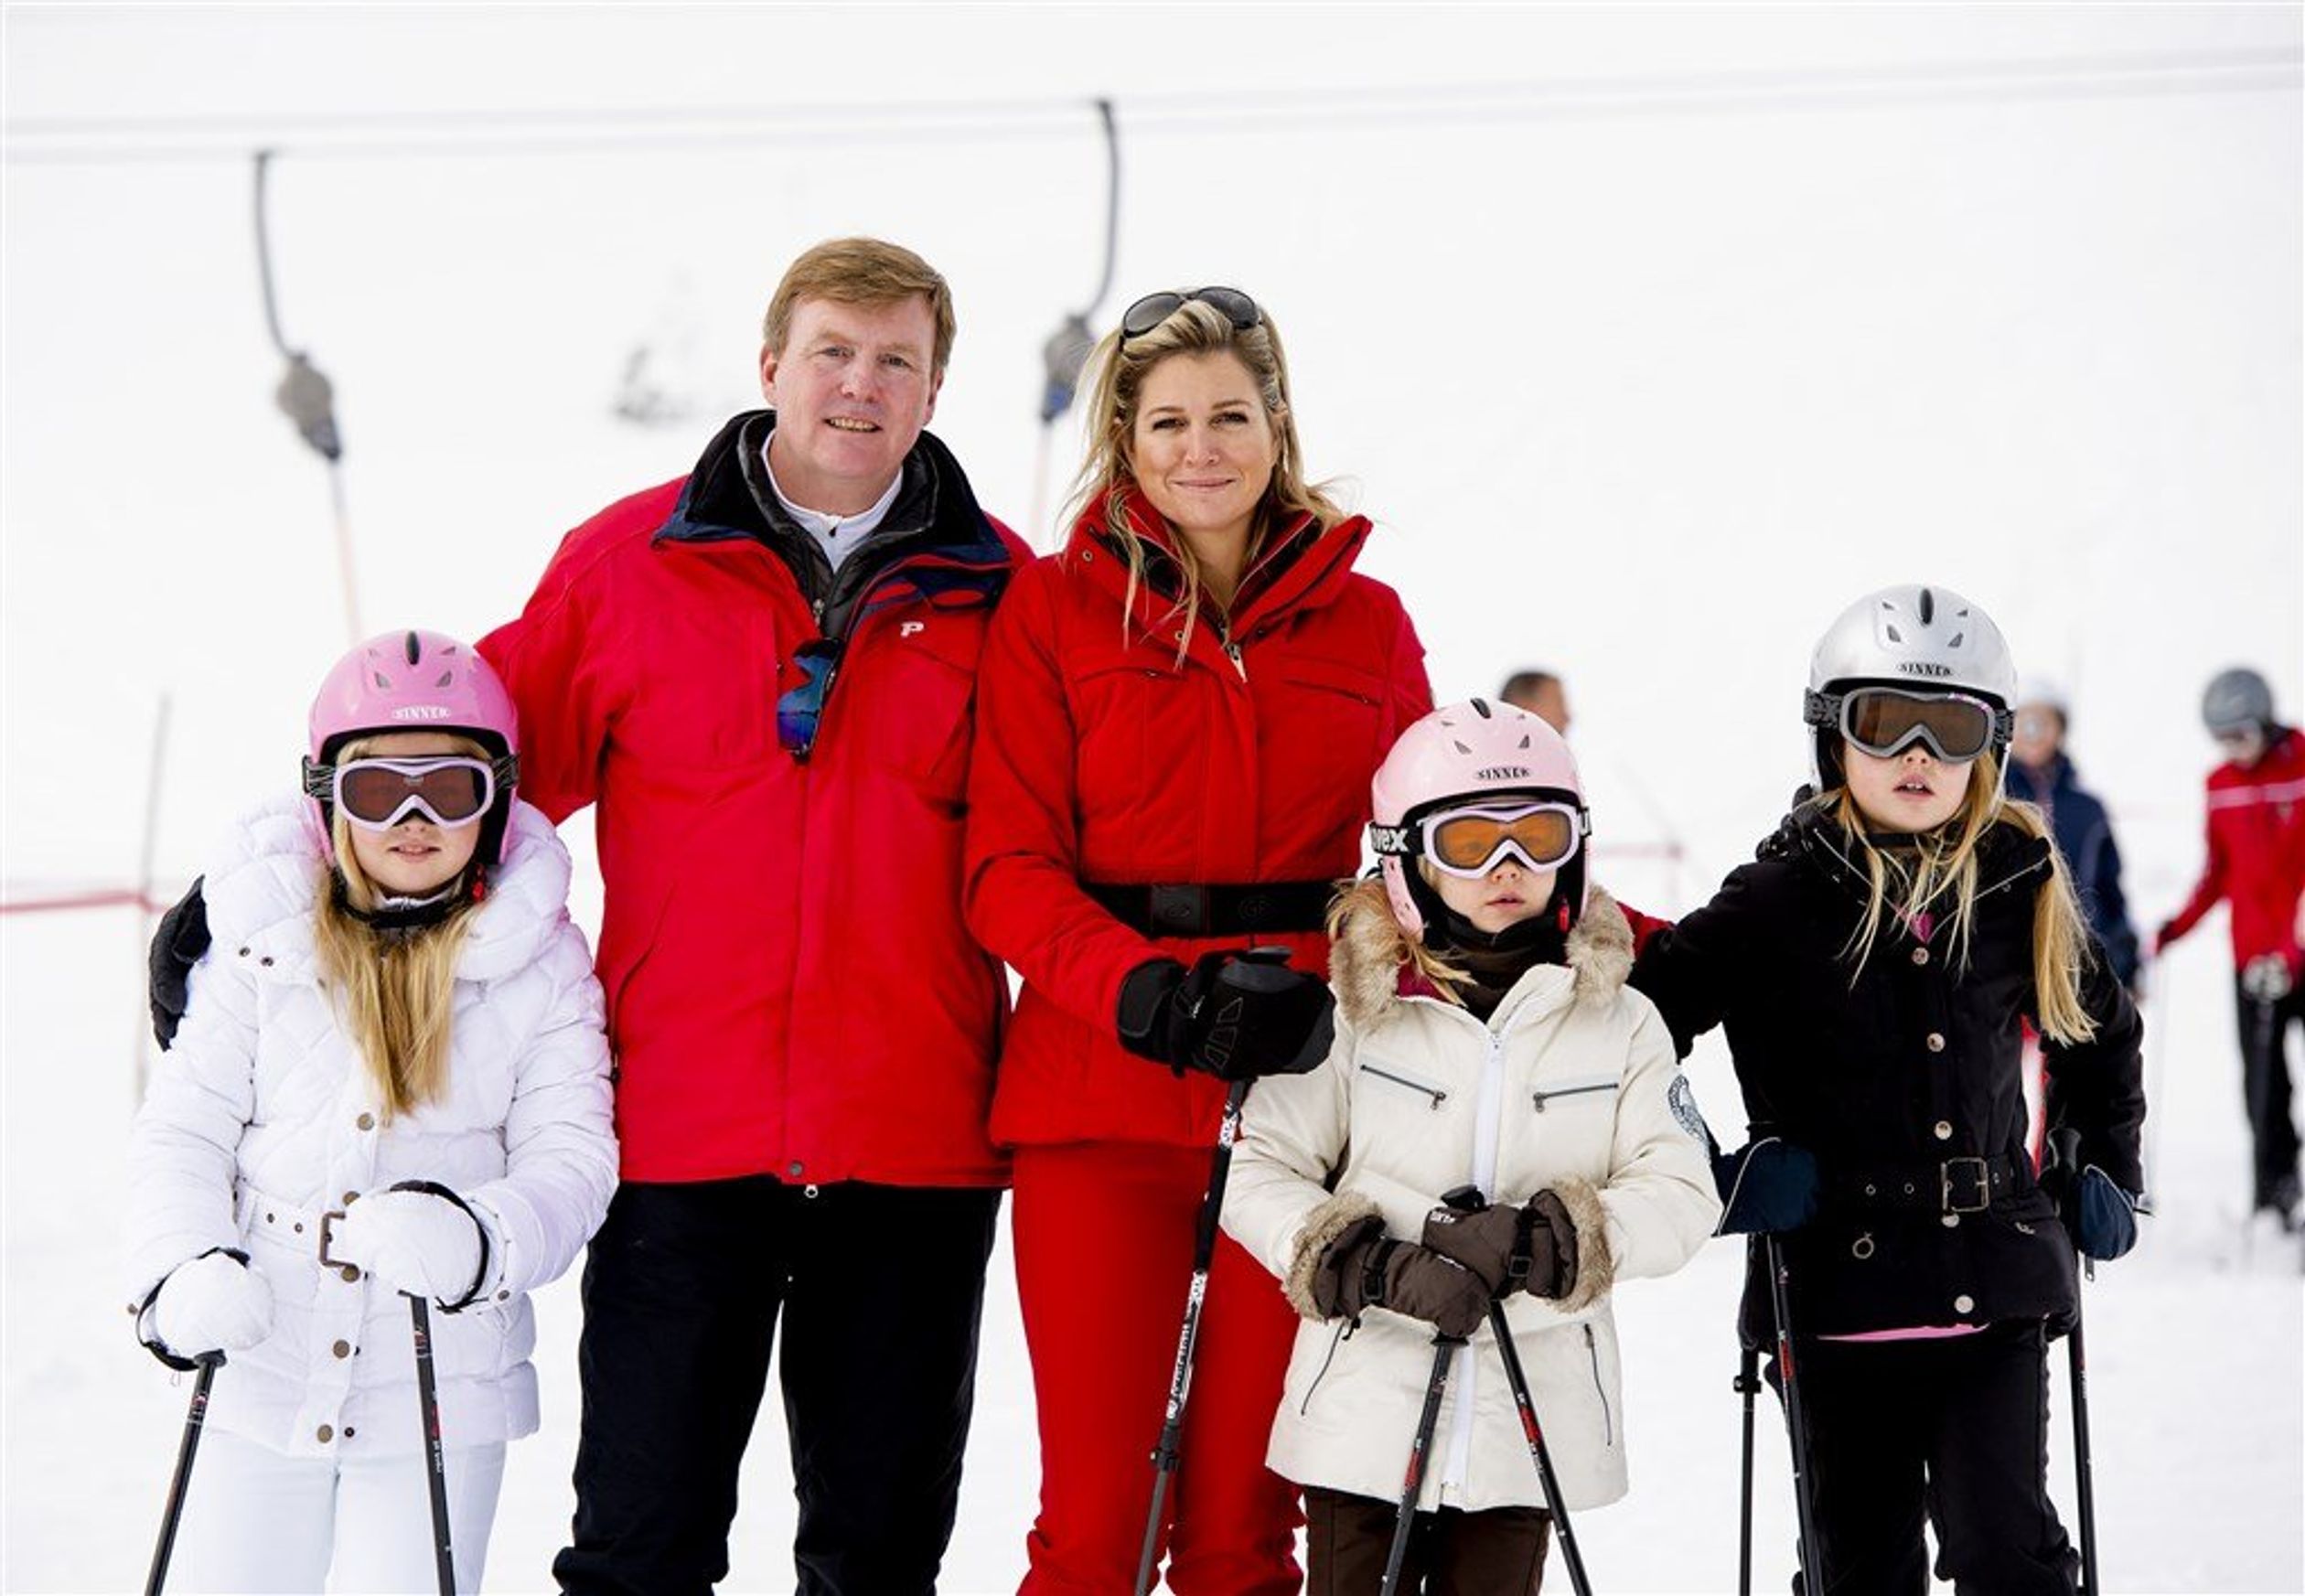 Koning Willem-Alexander, koningin Máxima en prinsessen Amalia, Ariane en Alexia poseren op de ski's